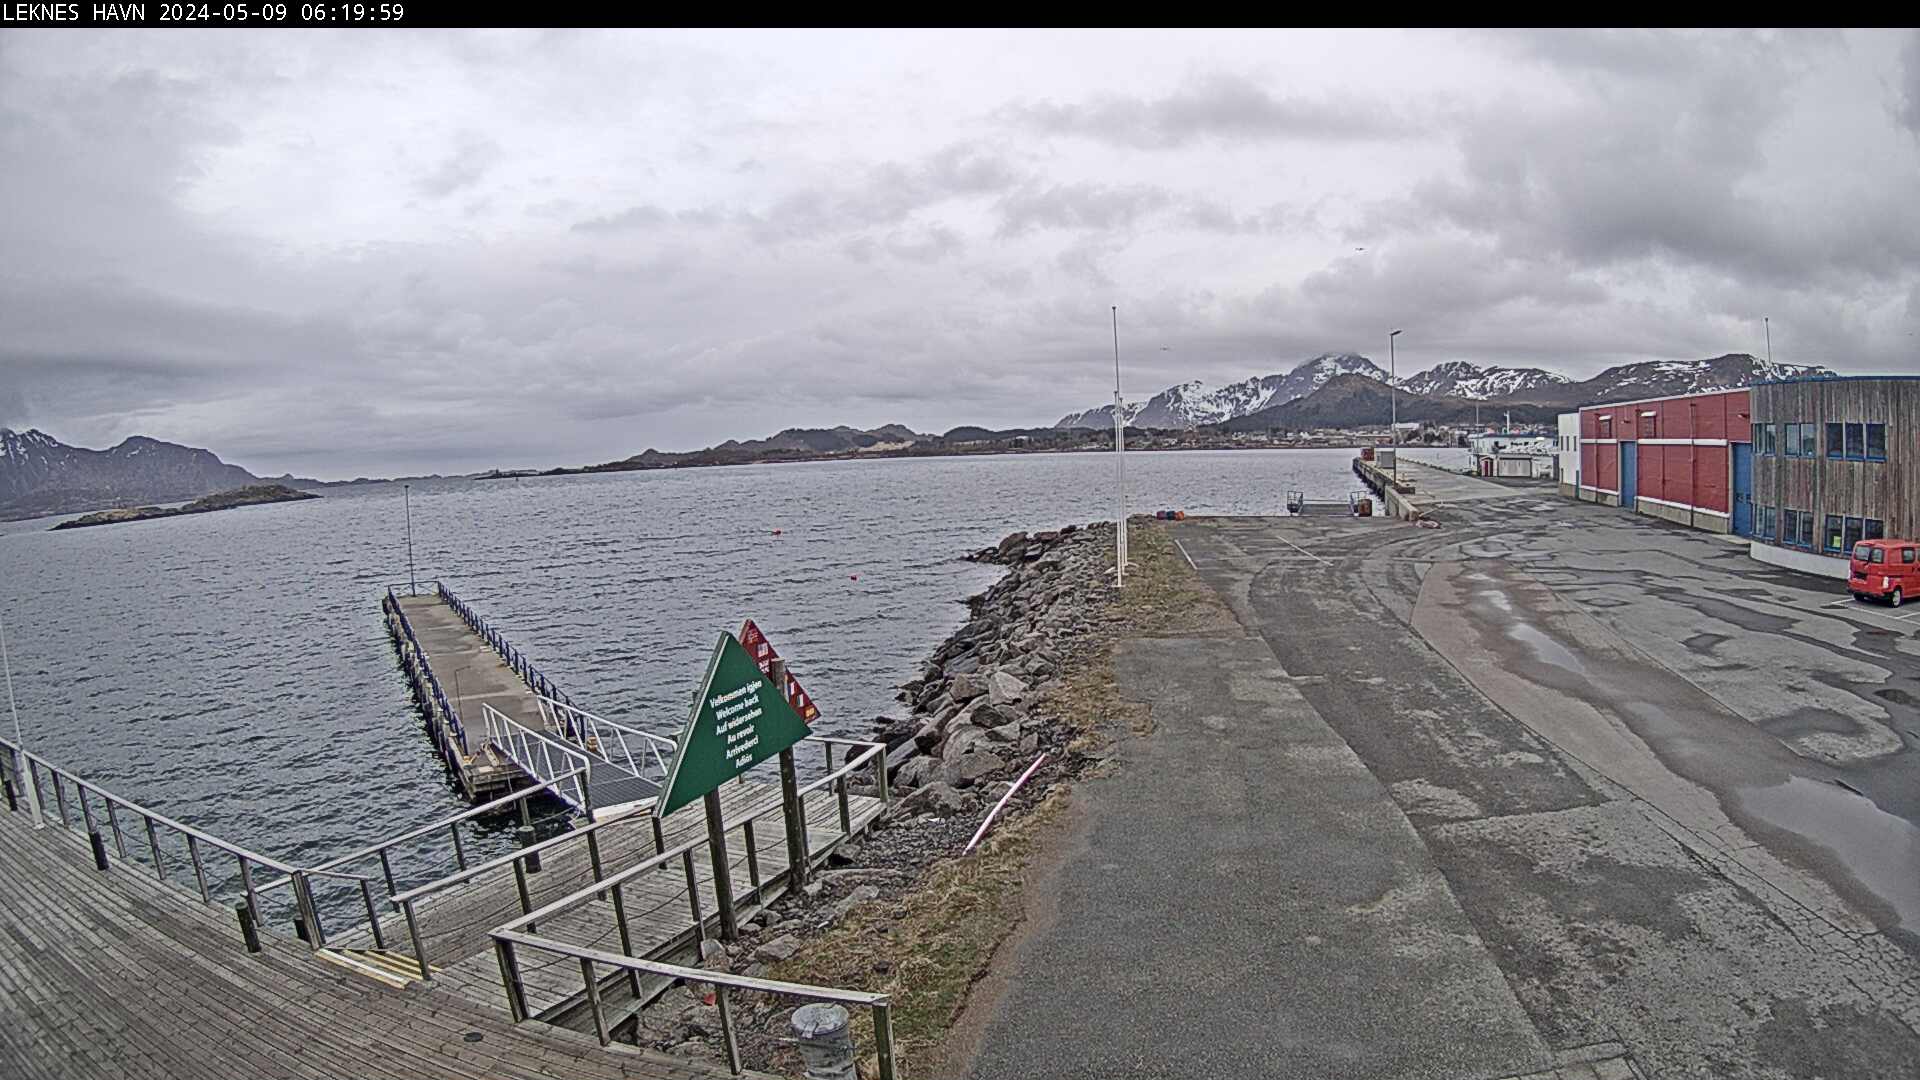 Web camera in Leknes, Lofoten, Norway